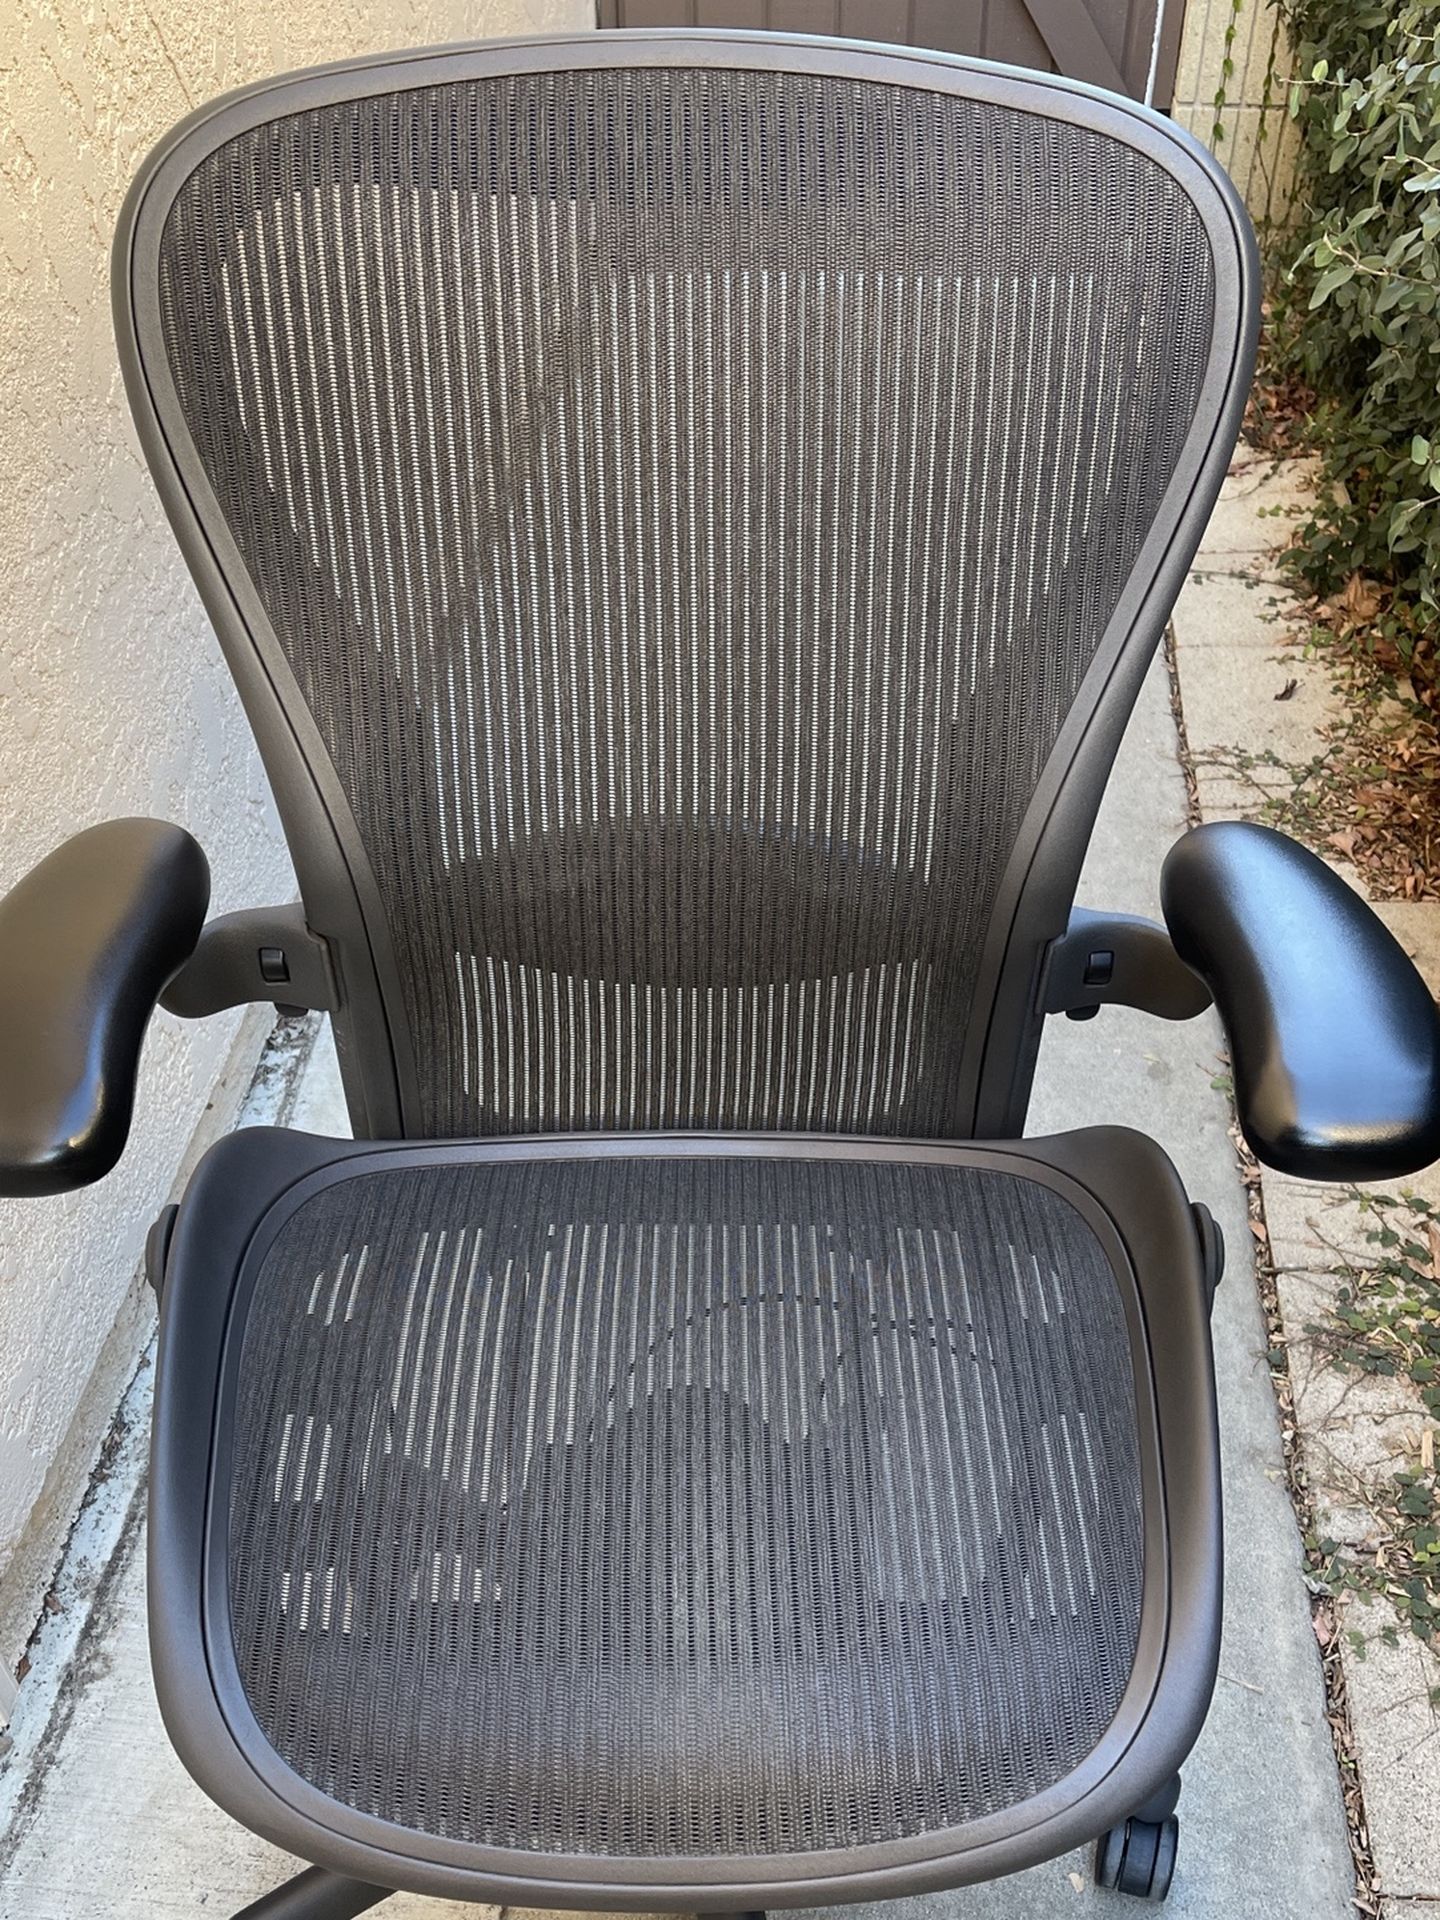 Herman Miller Aeron Office Chair Size C